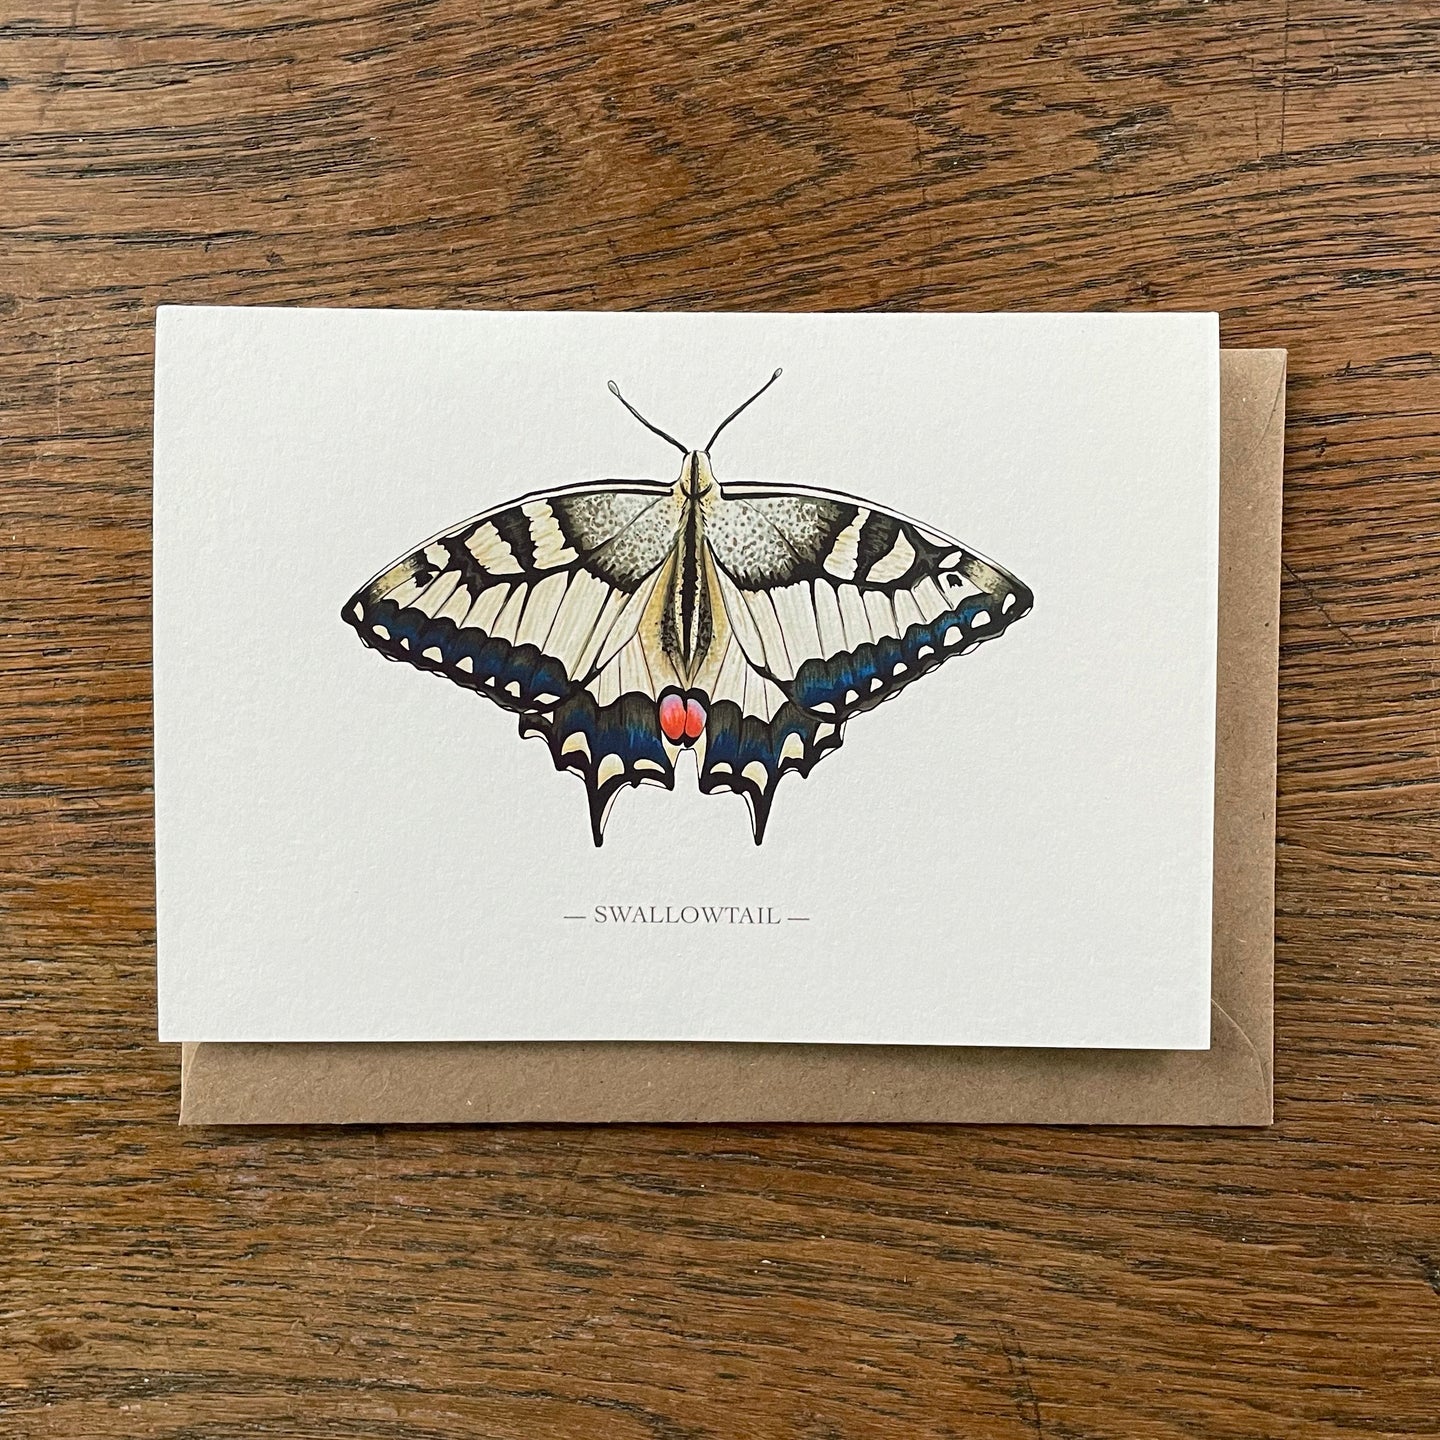 Swallowtail butterfly card